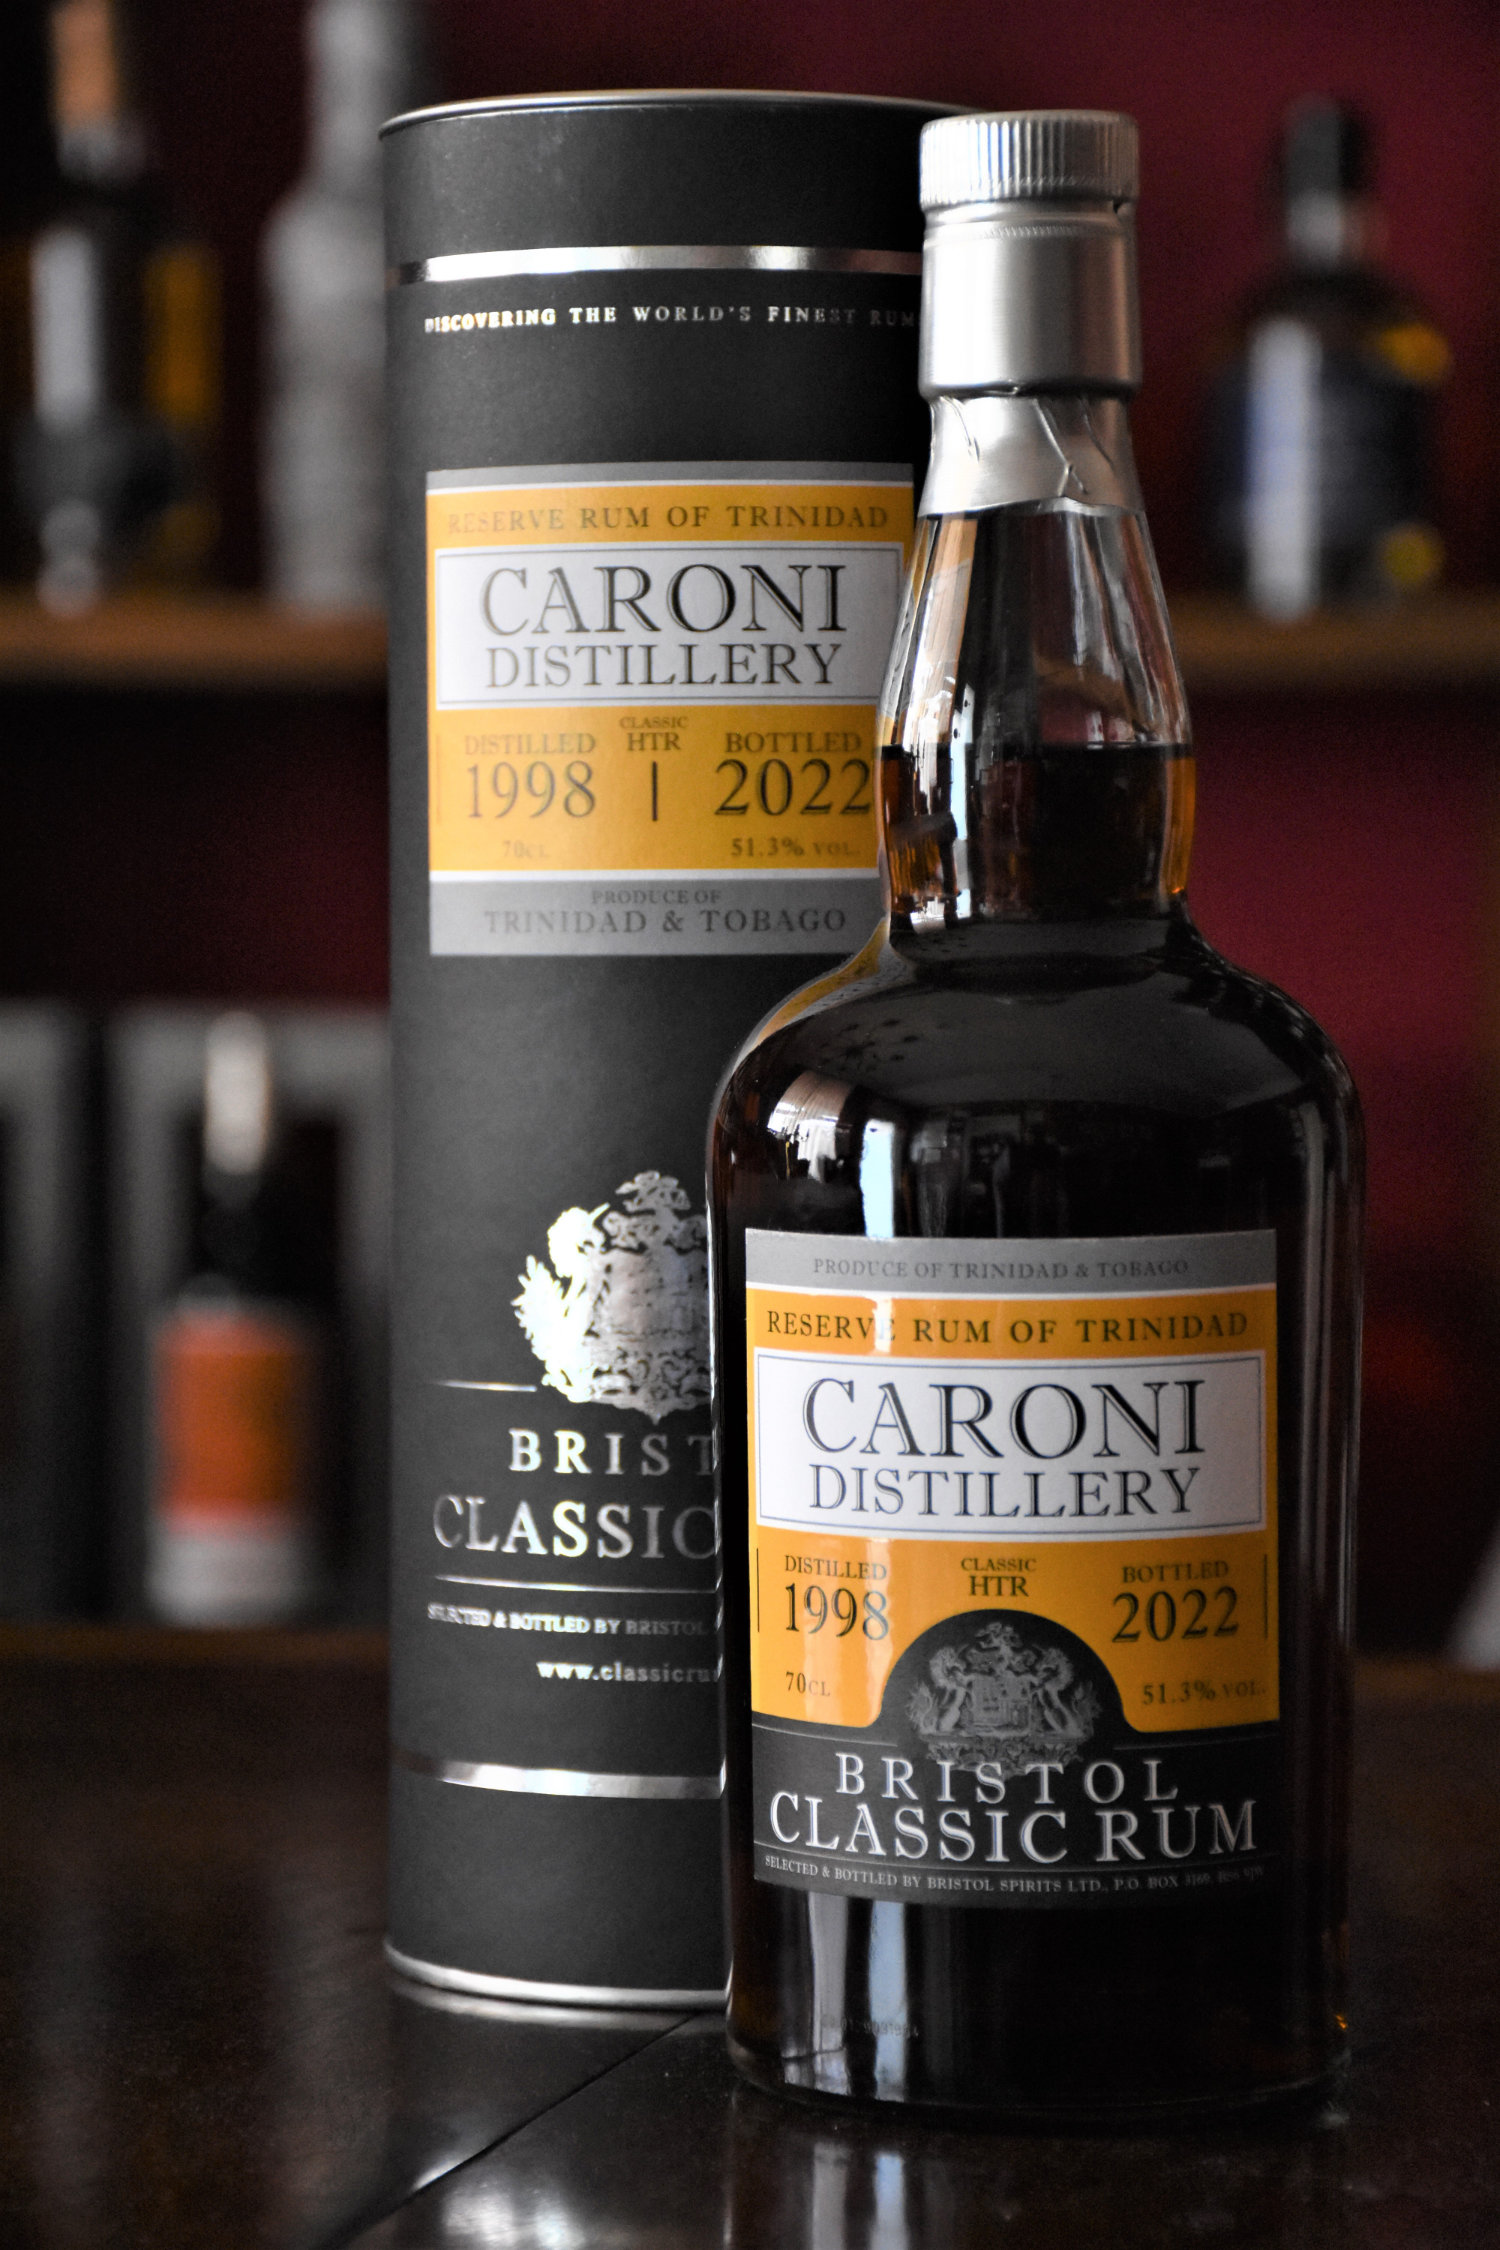 Bristol Reserve Rum of Trinidad & Tobago Caroni 1998/2022, 51,3% Alc.Vol., Bristol Spirits Ltd.